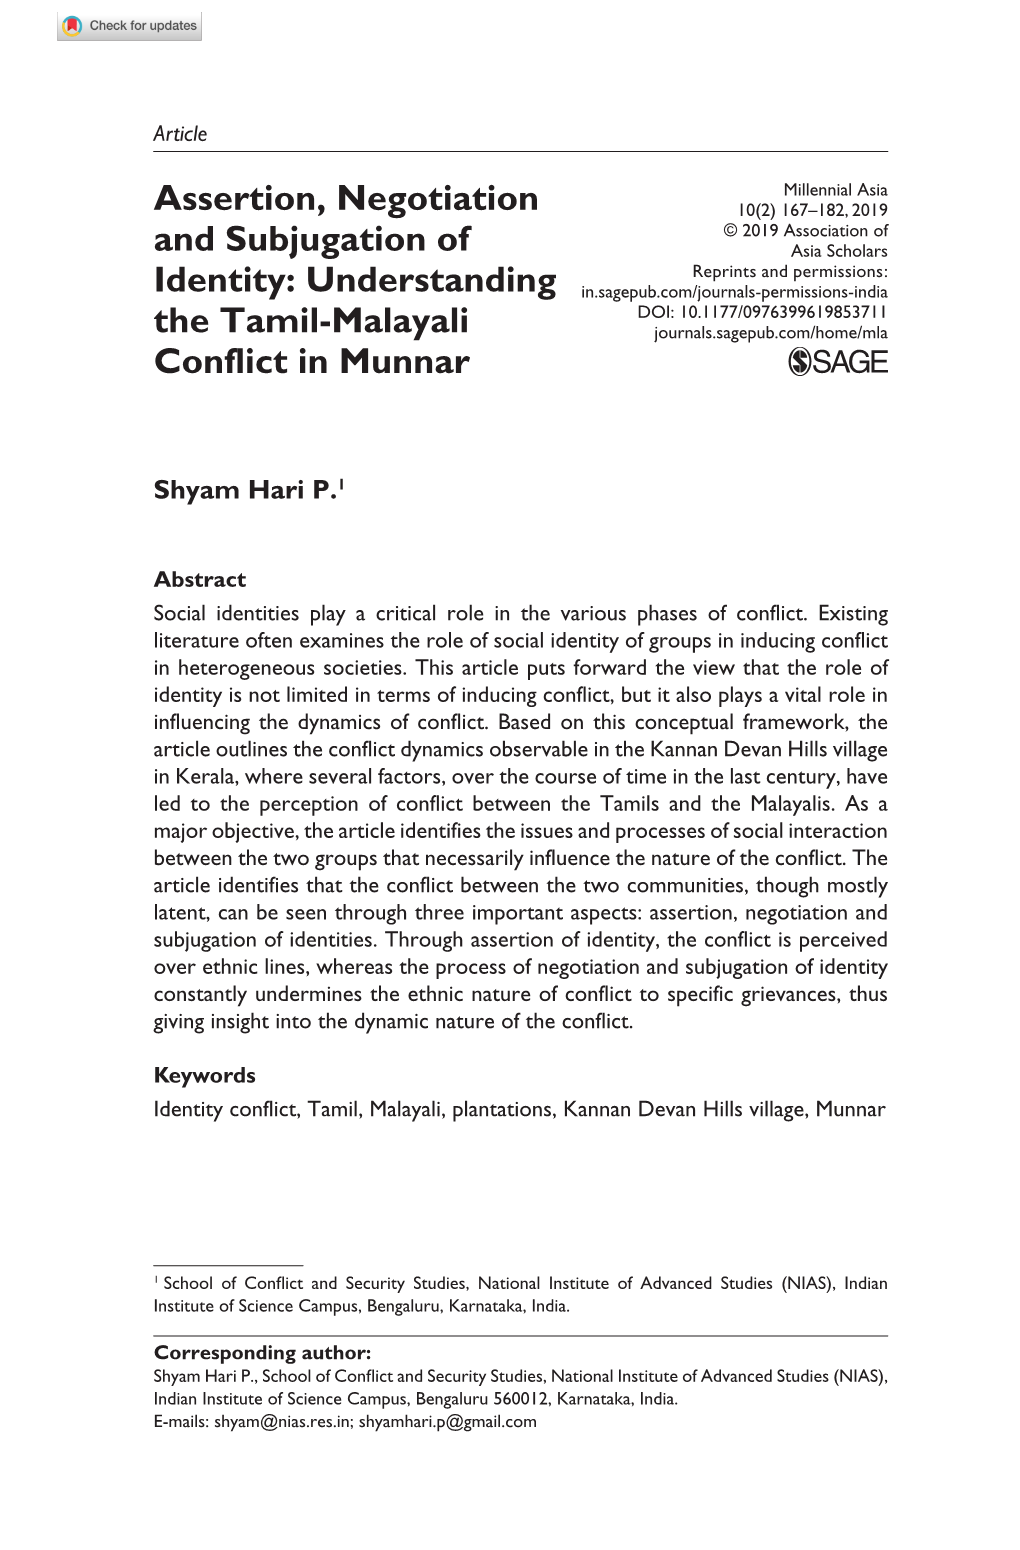 Understanding the Tamil-Malayali